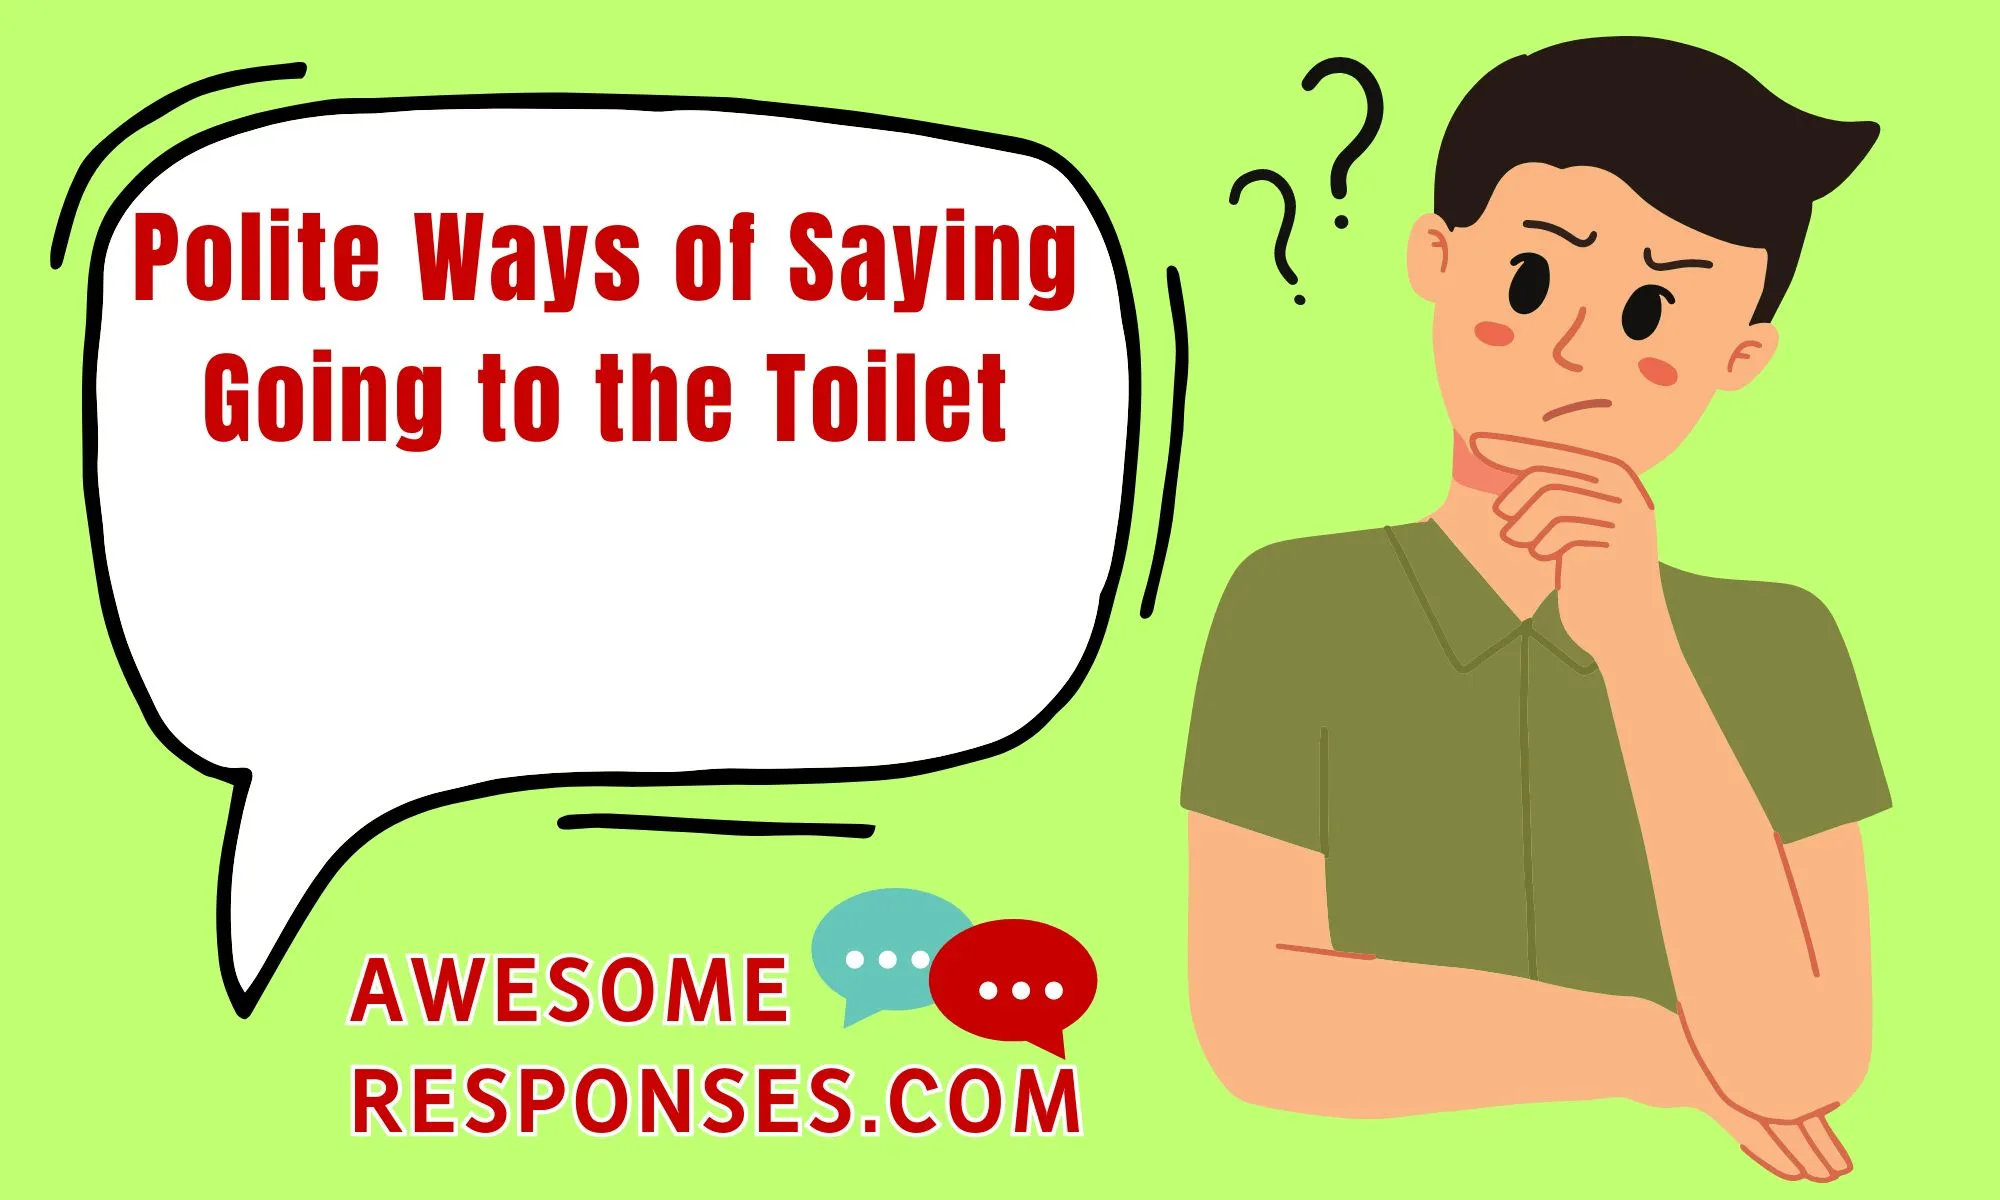 Polite Ways of Saying Going to the Toilet